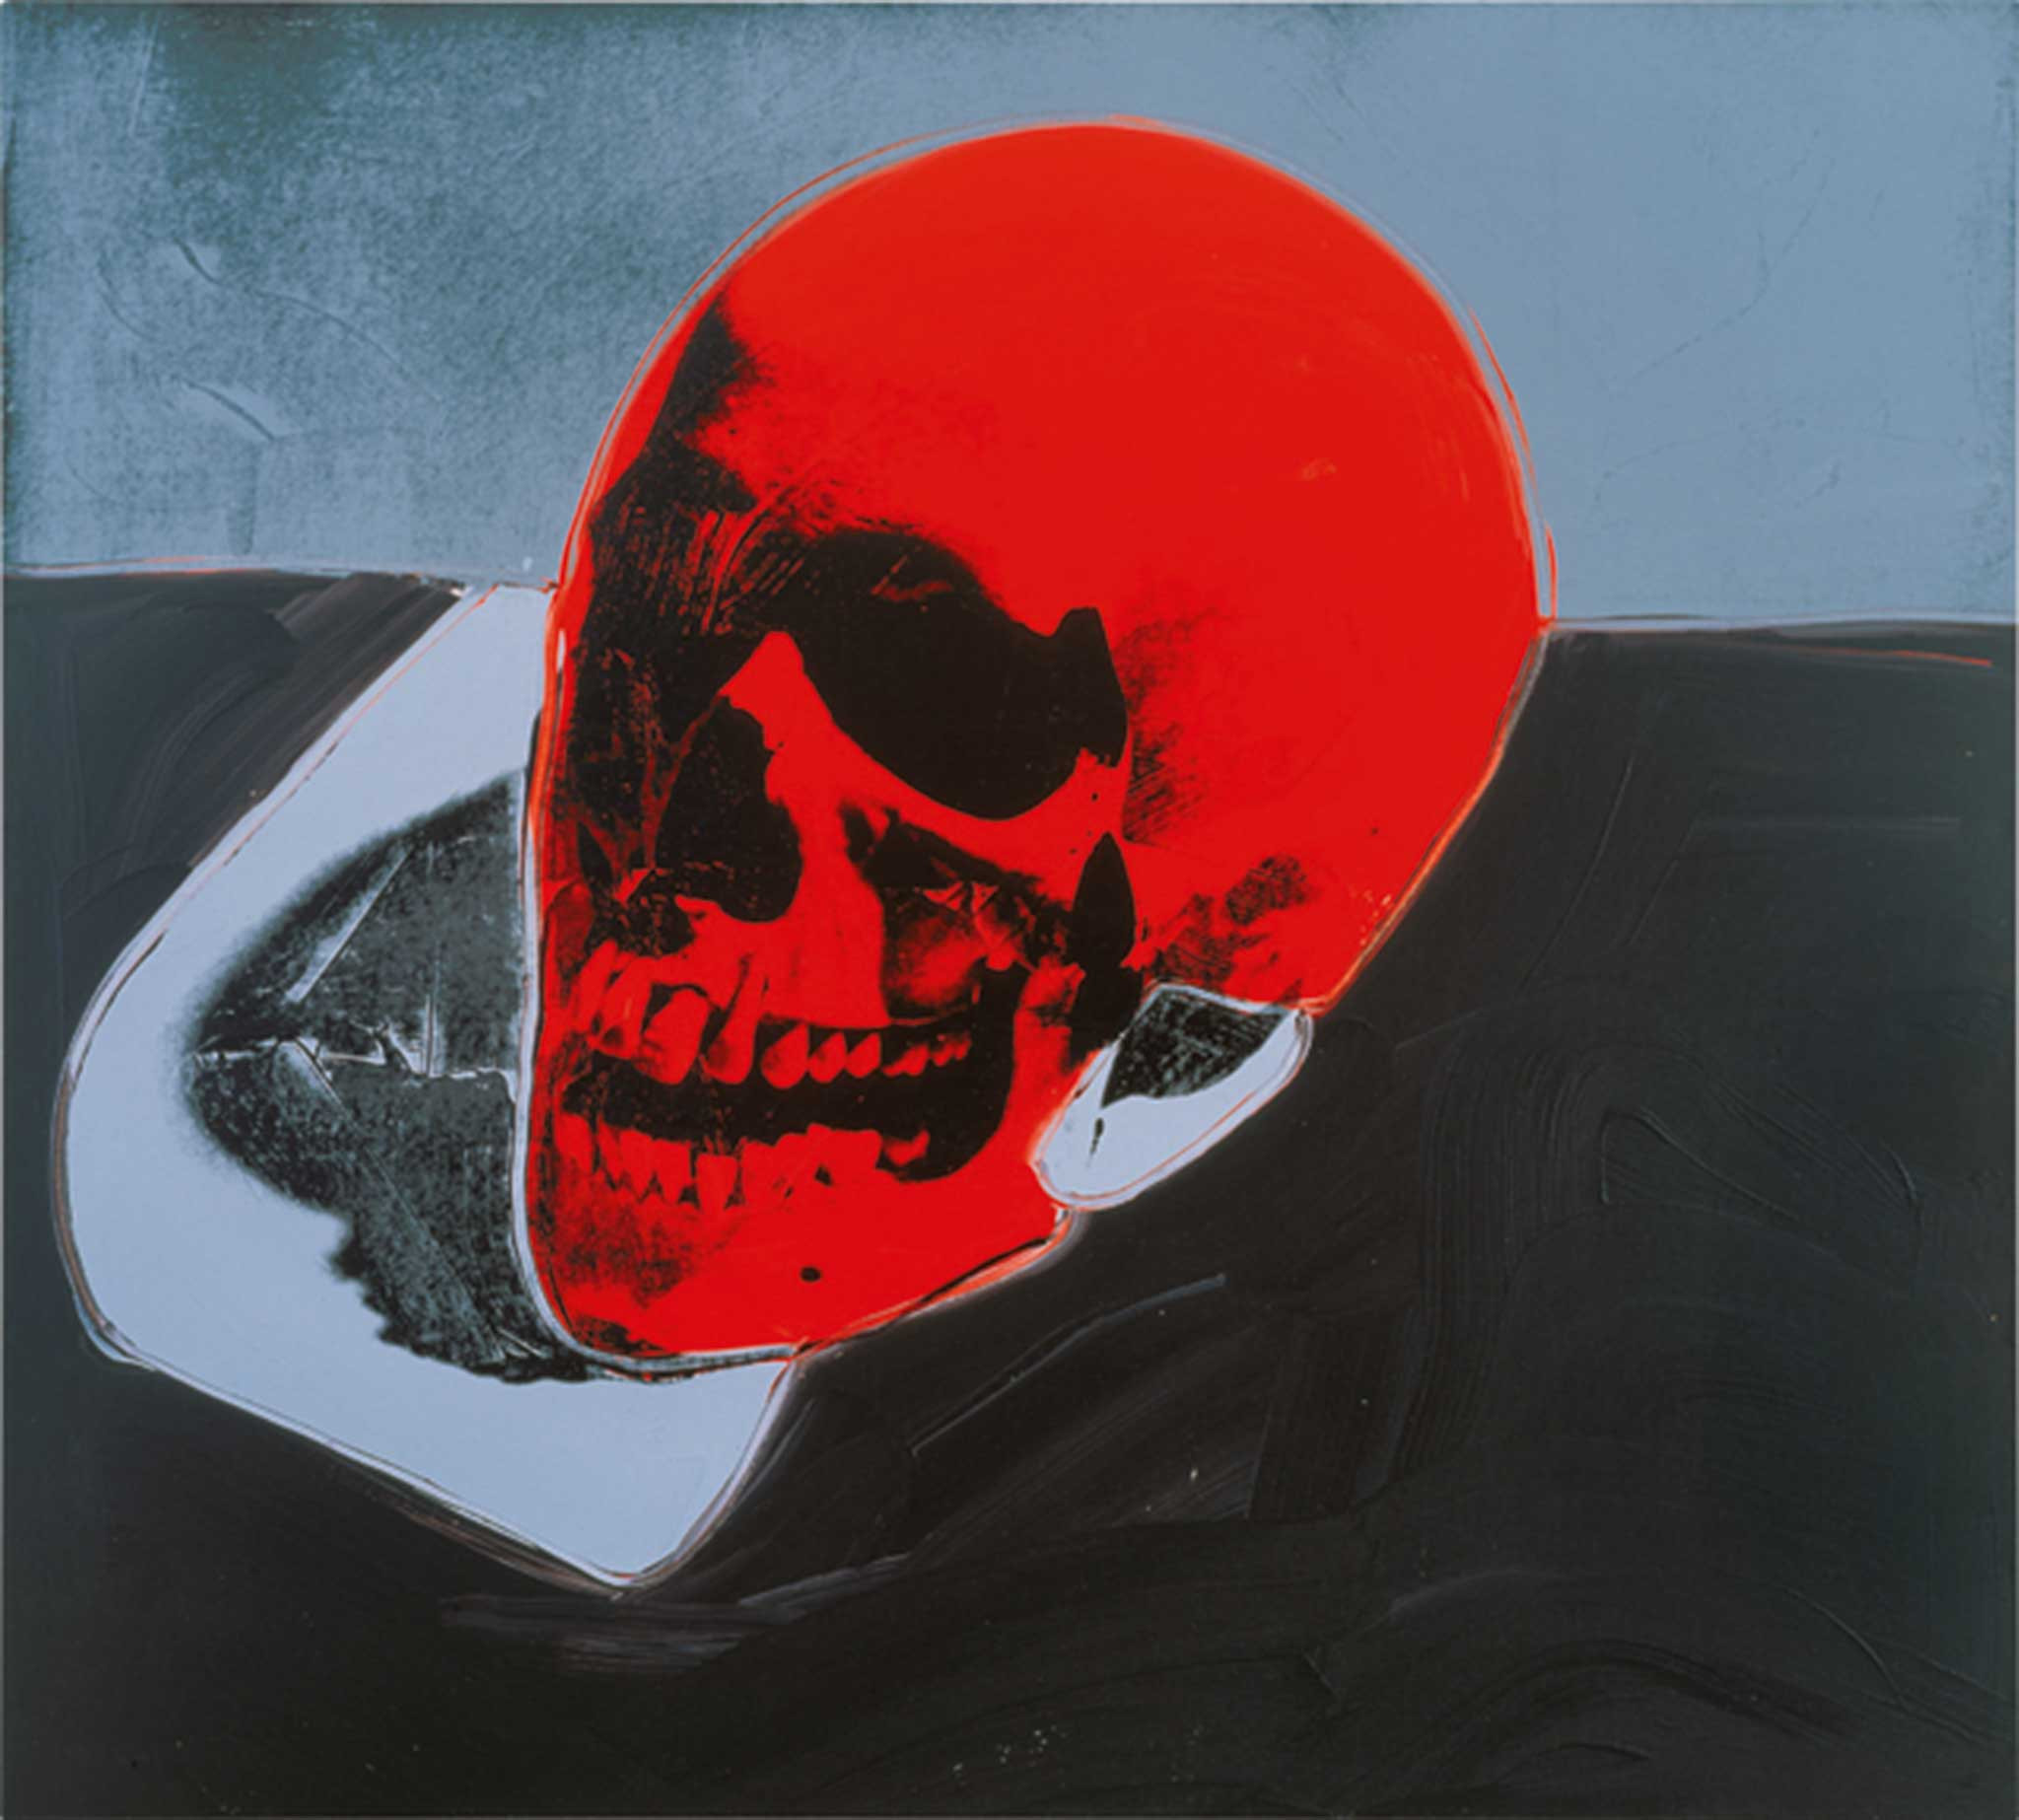 Andy Warhol, “Skull”, 1976